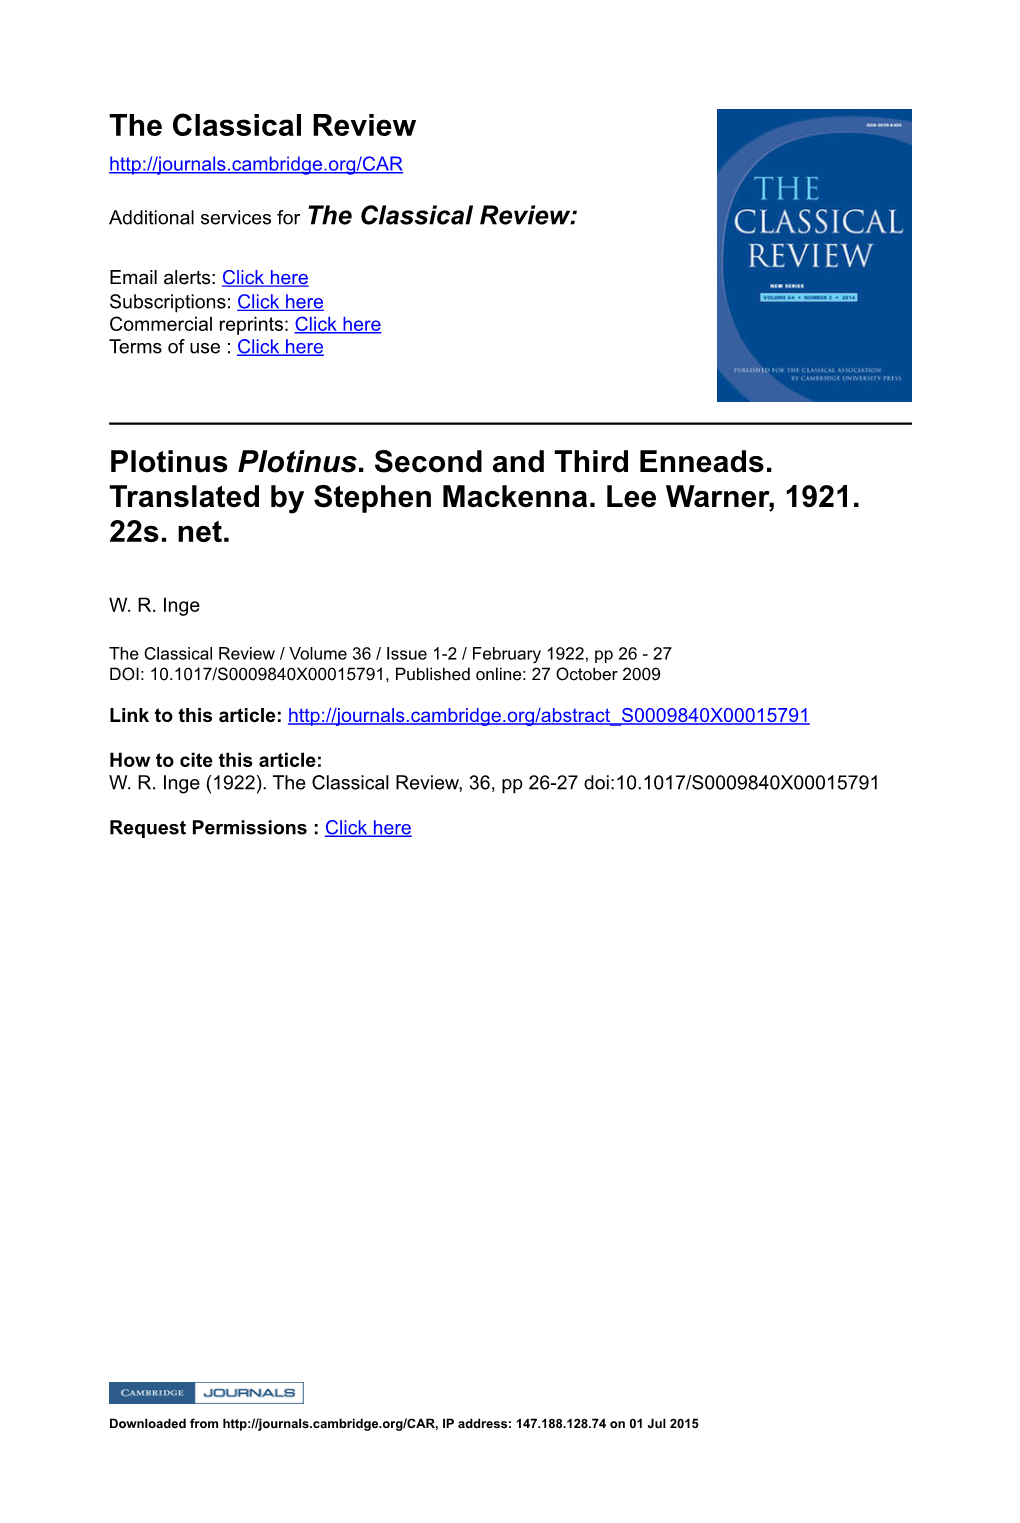 Plotinus Plotinus. Second and Third Enneads. Translated by Stephen Mackenna